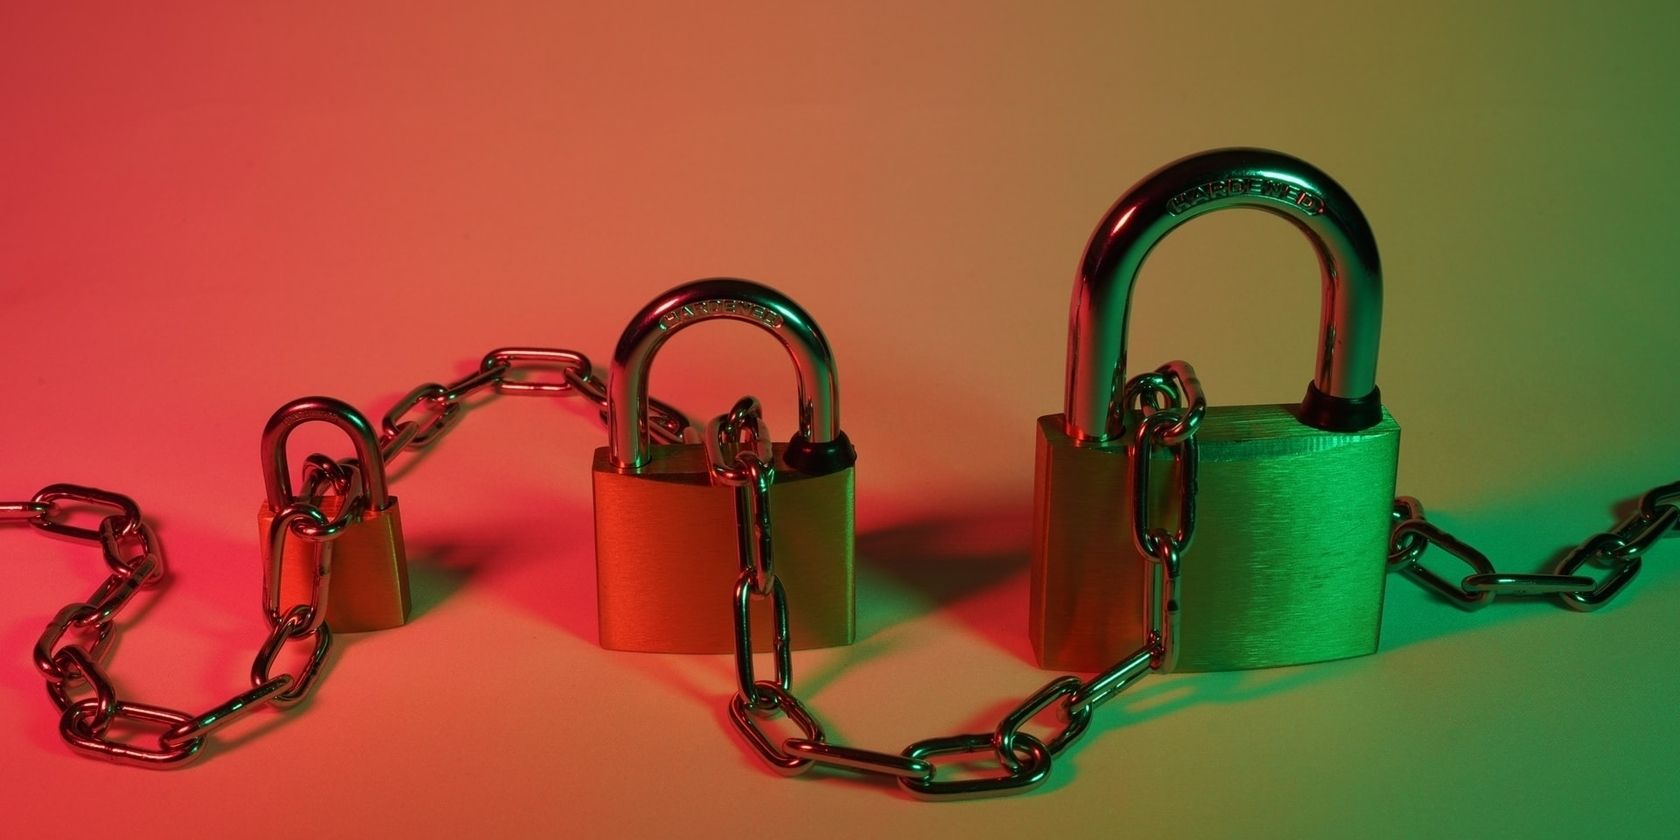 Three locks and a chain going through them